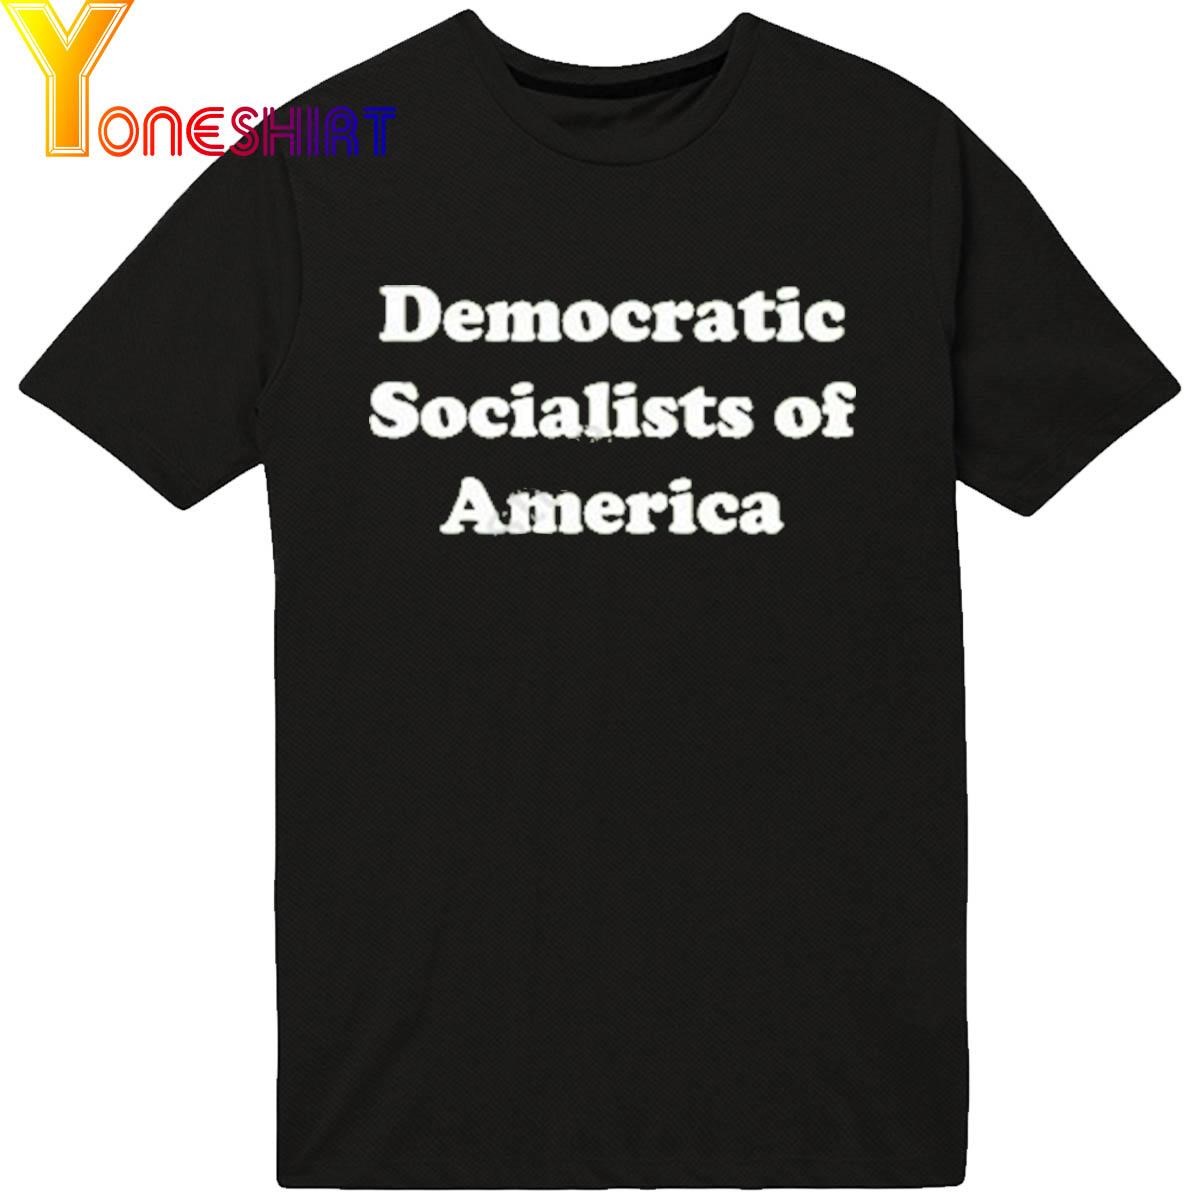 Democratic Socialists Of America shirt